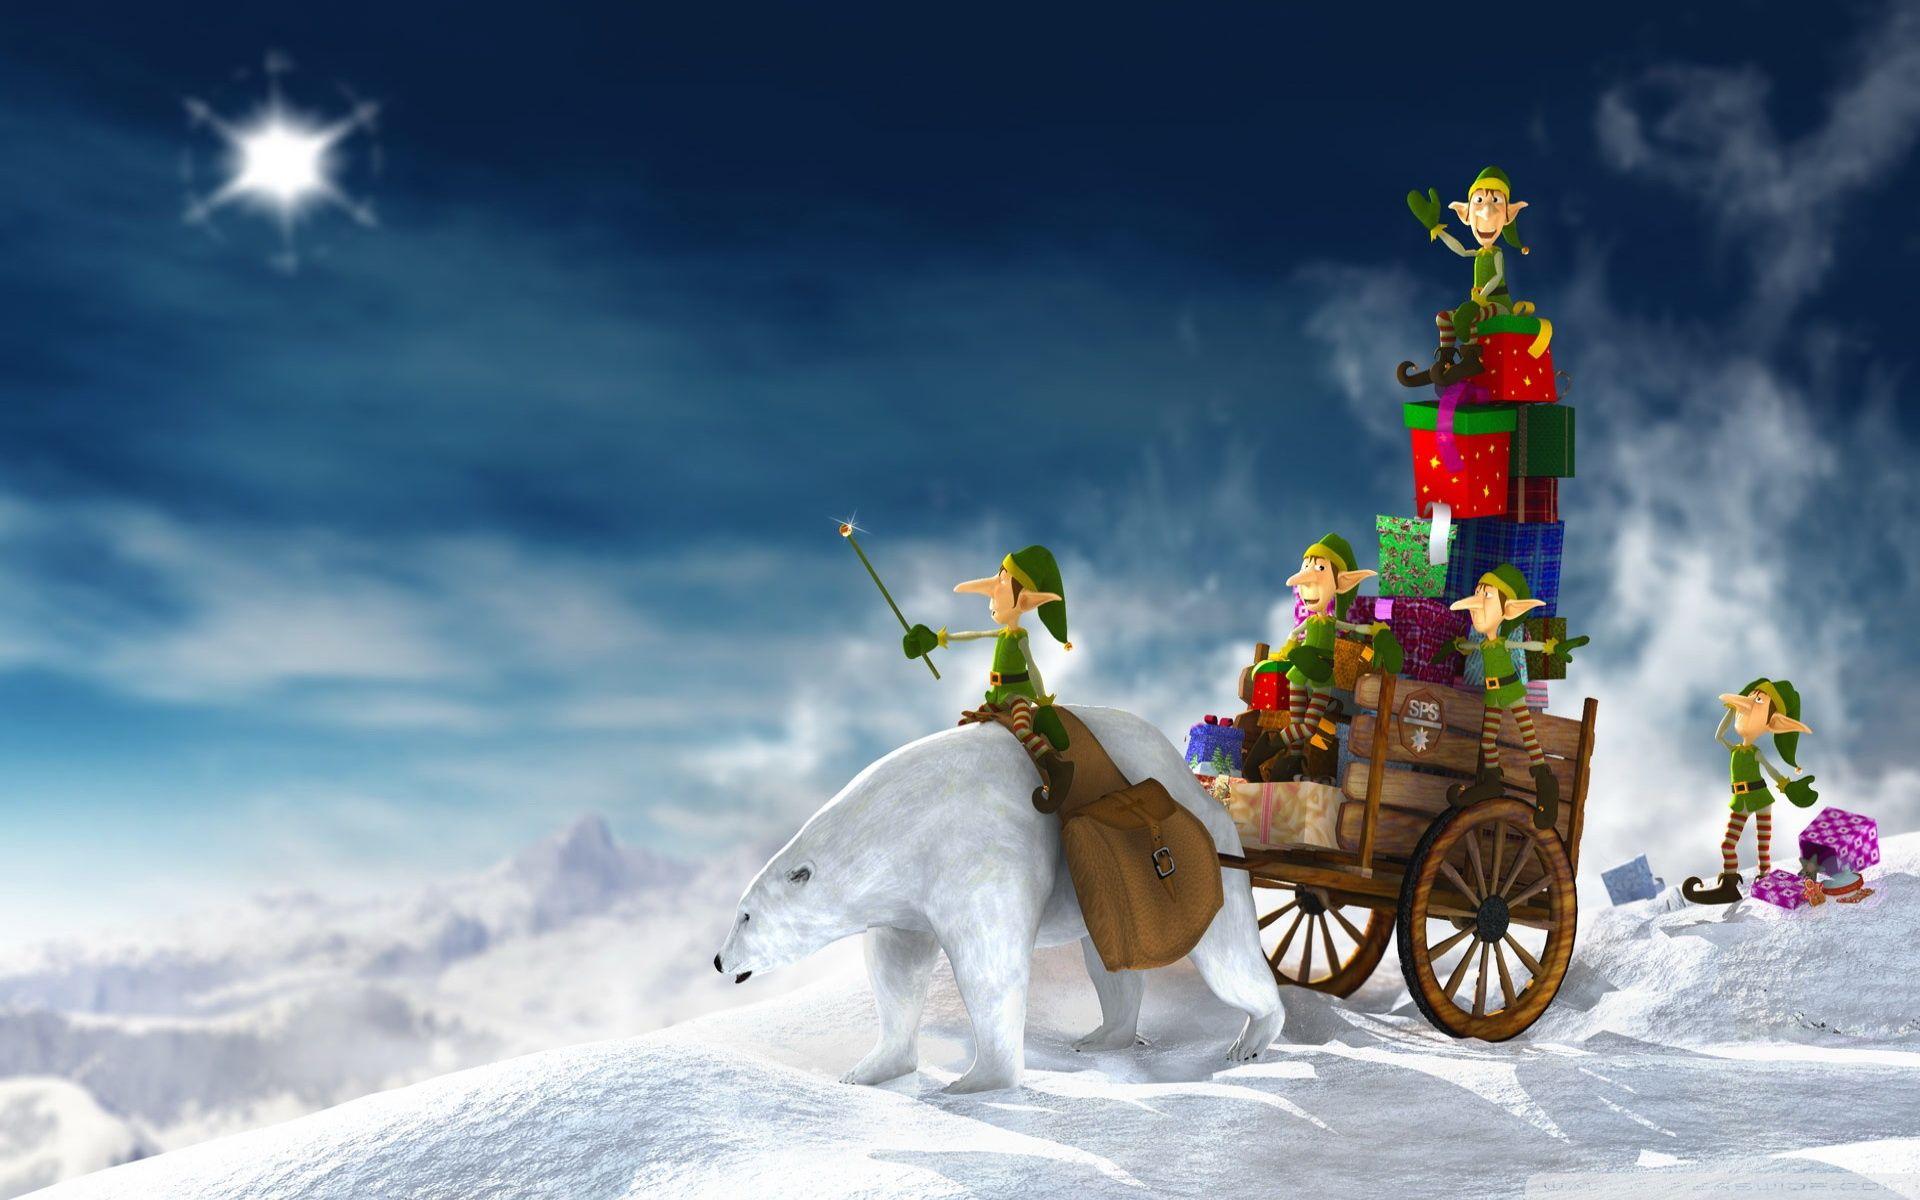 Free Vector  Christmas elf seamless background